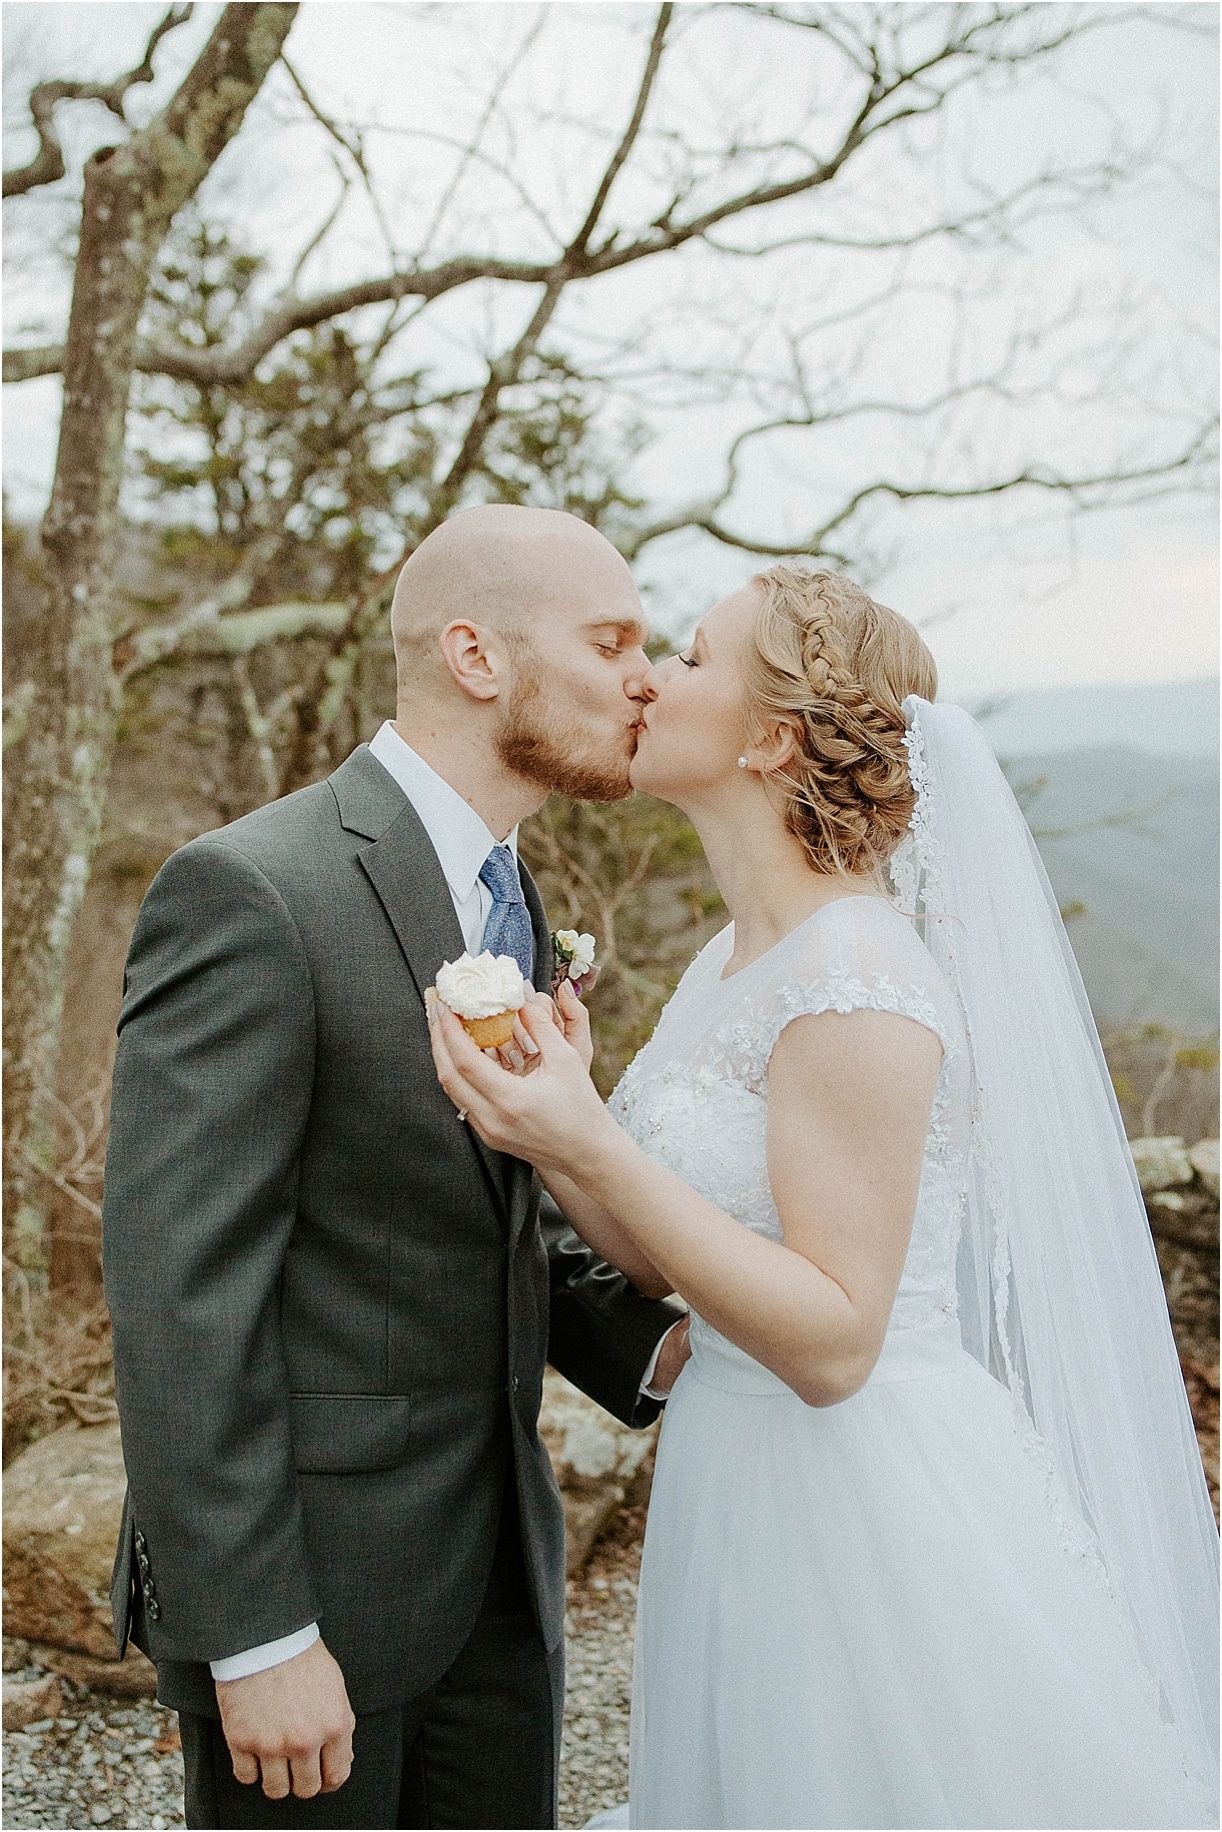 Small Intimate Wedding During Coronavirus What to Do COVID 19 | Hill City Bride Virginia Weddings